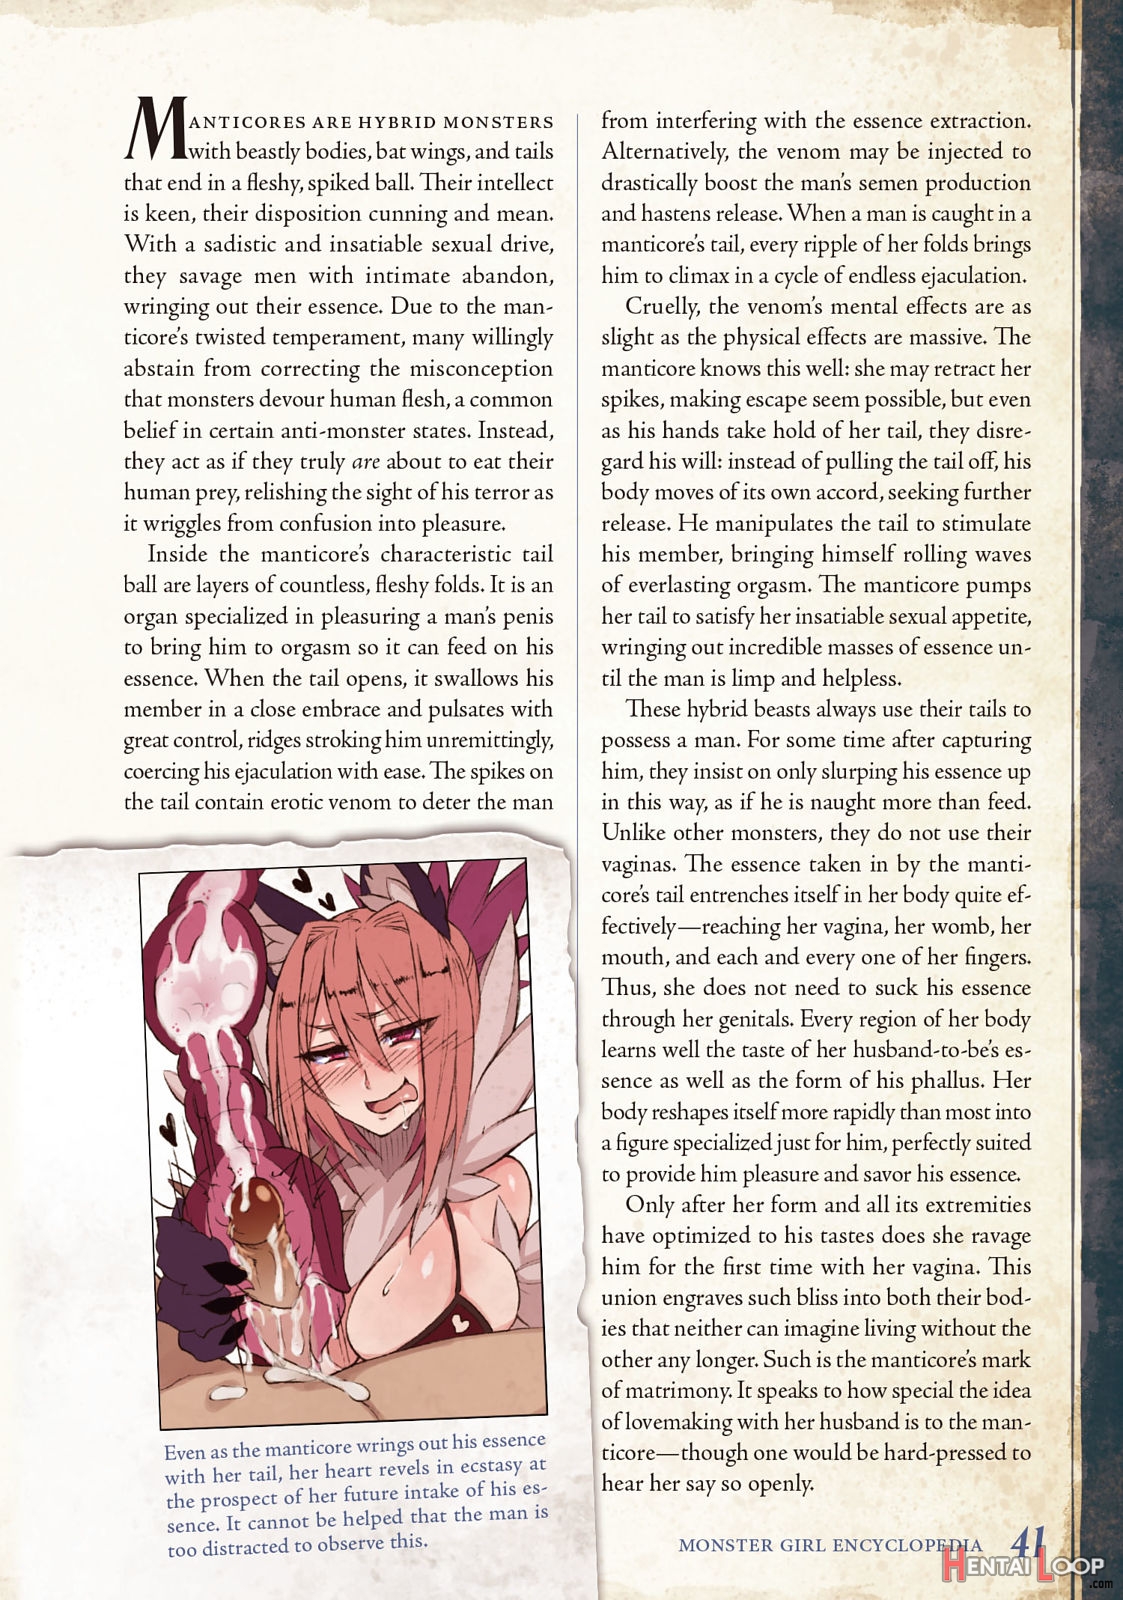 Monster Girl Encyclopedia Vol. 2 page 42